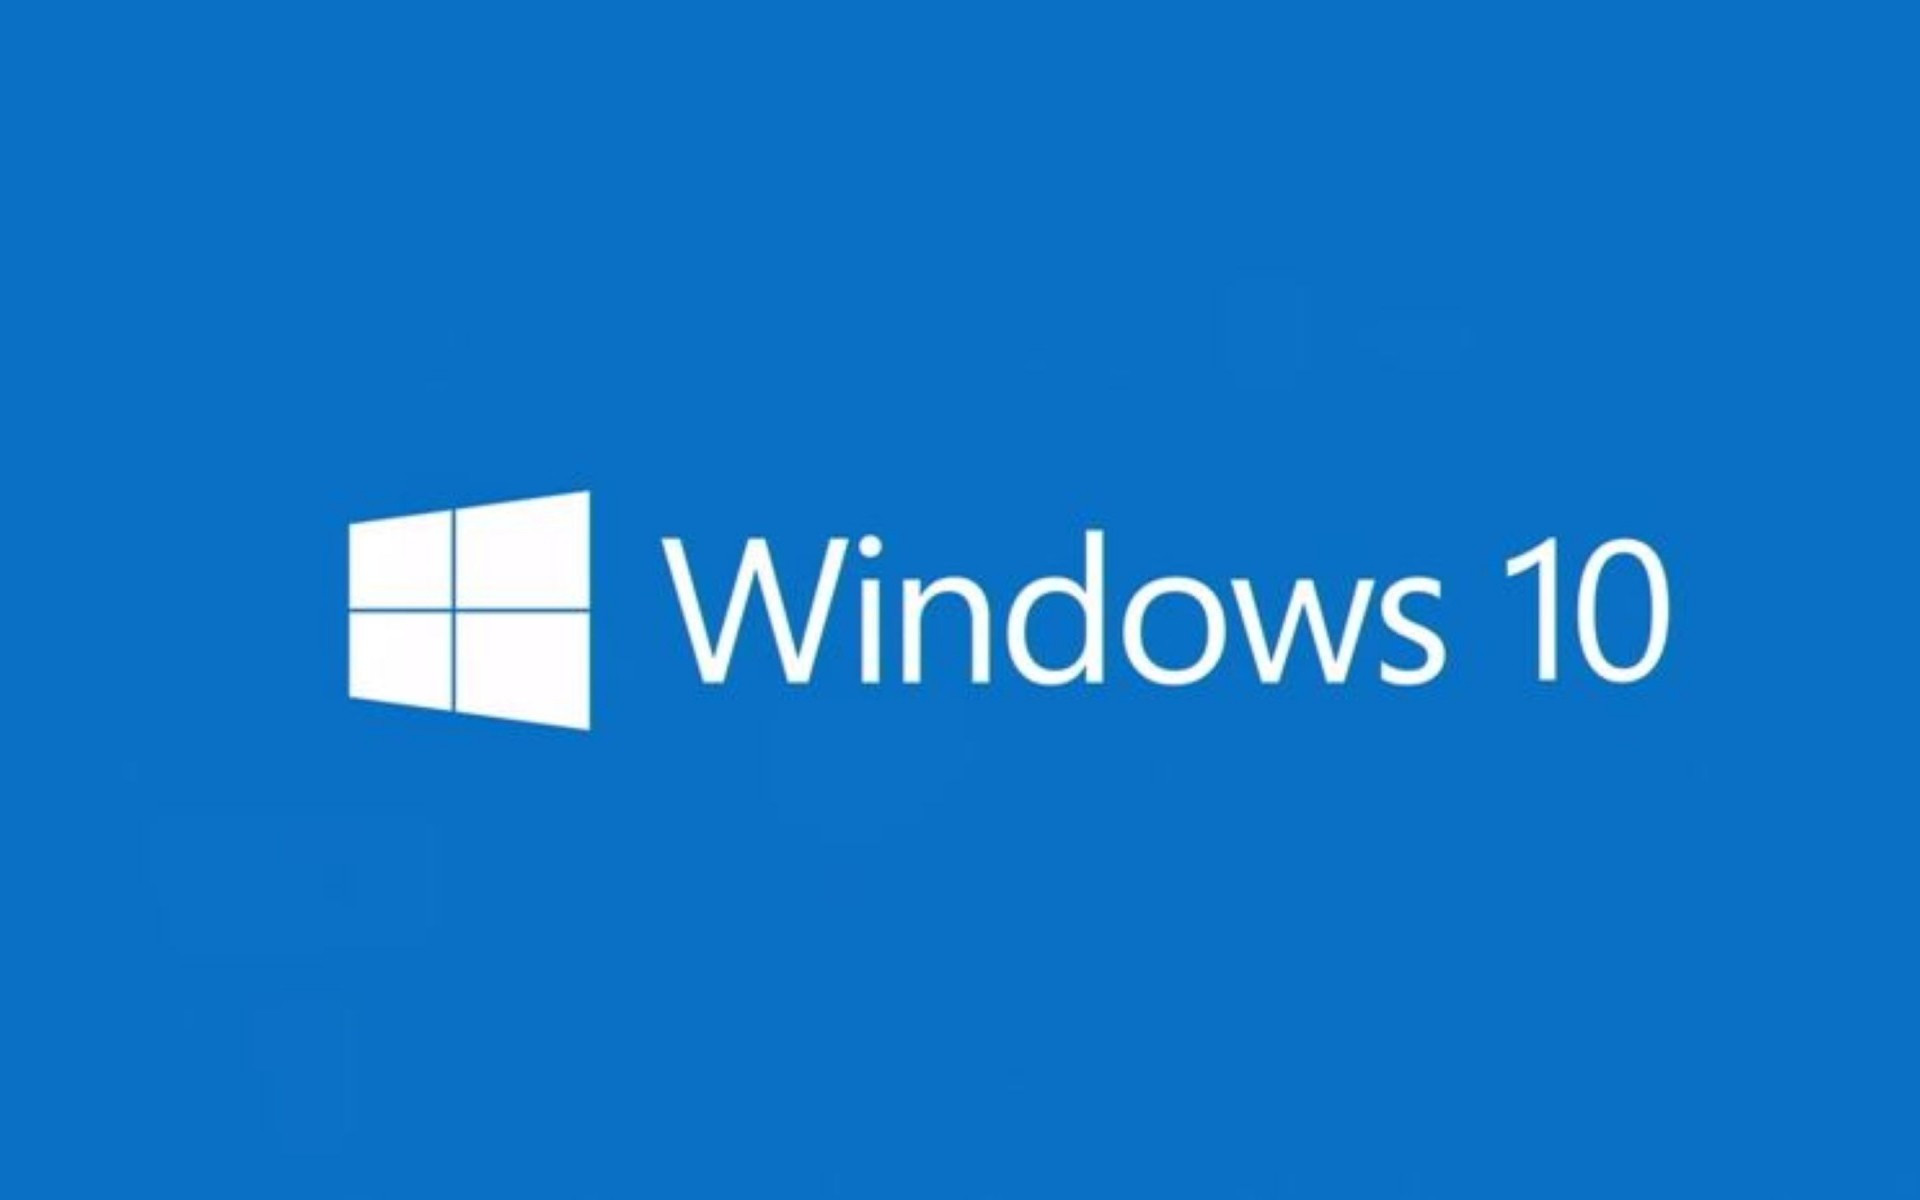 Windows Desktop Images Windows Backgrounds Windows 10